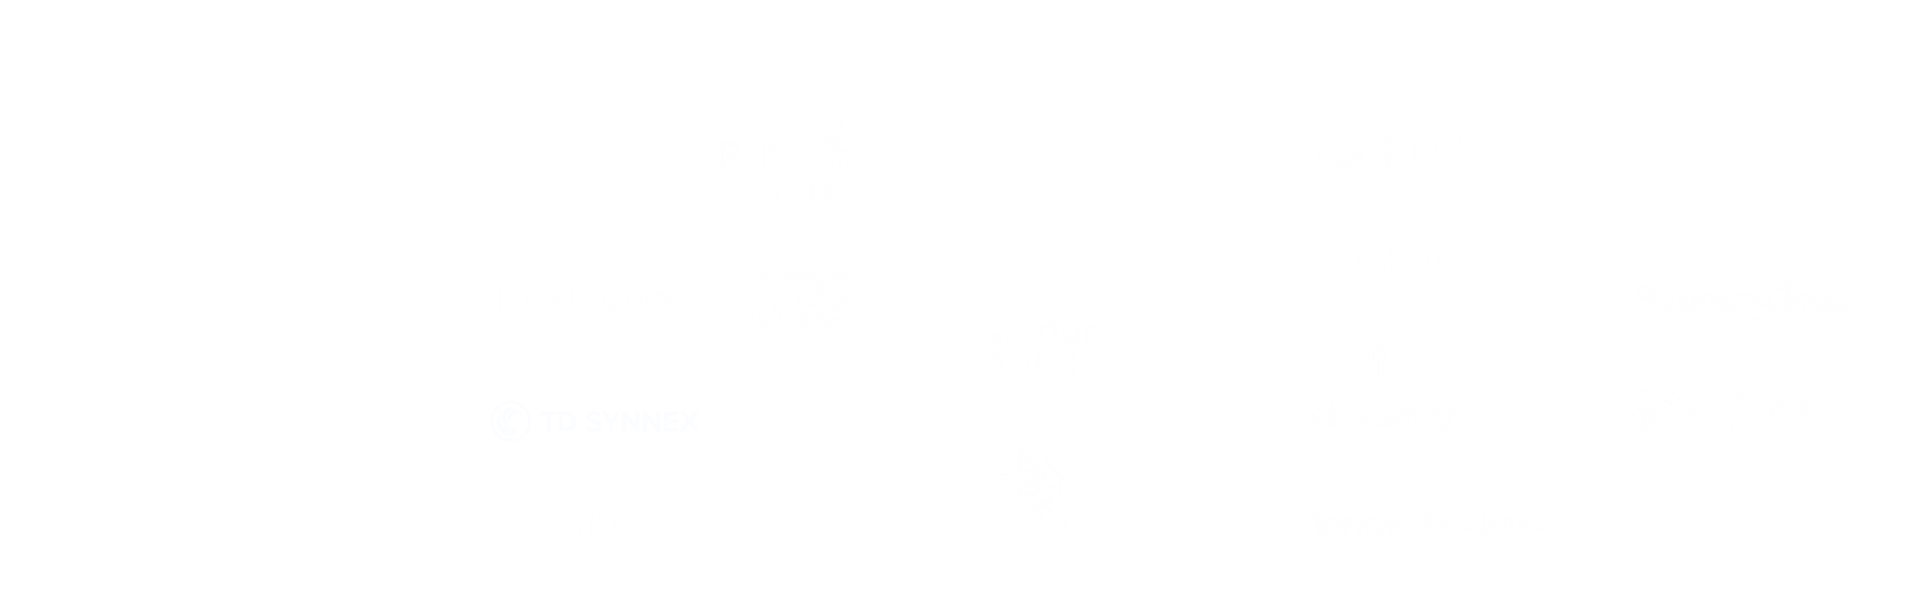 tech-climbers-liverpool-ecosystem-partners